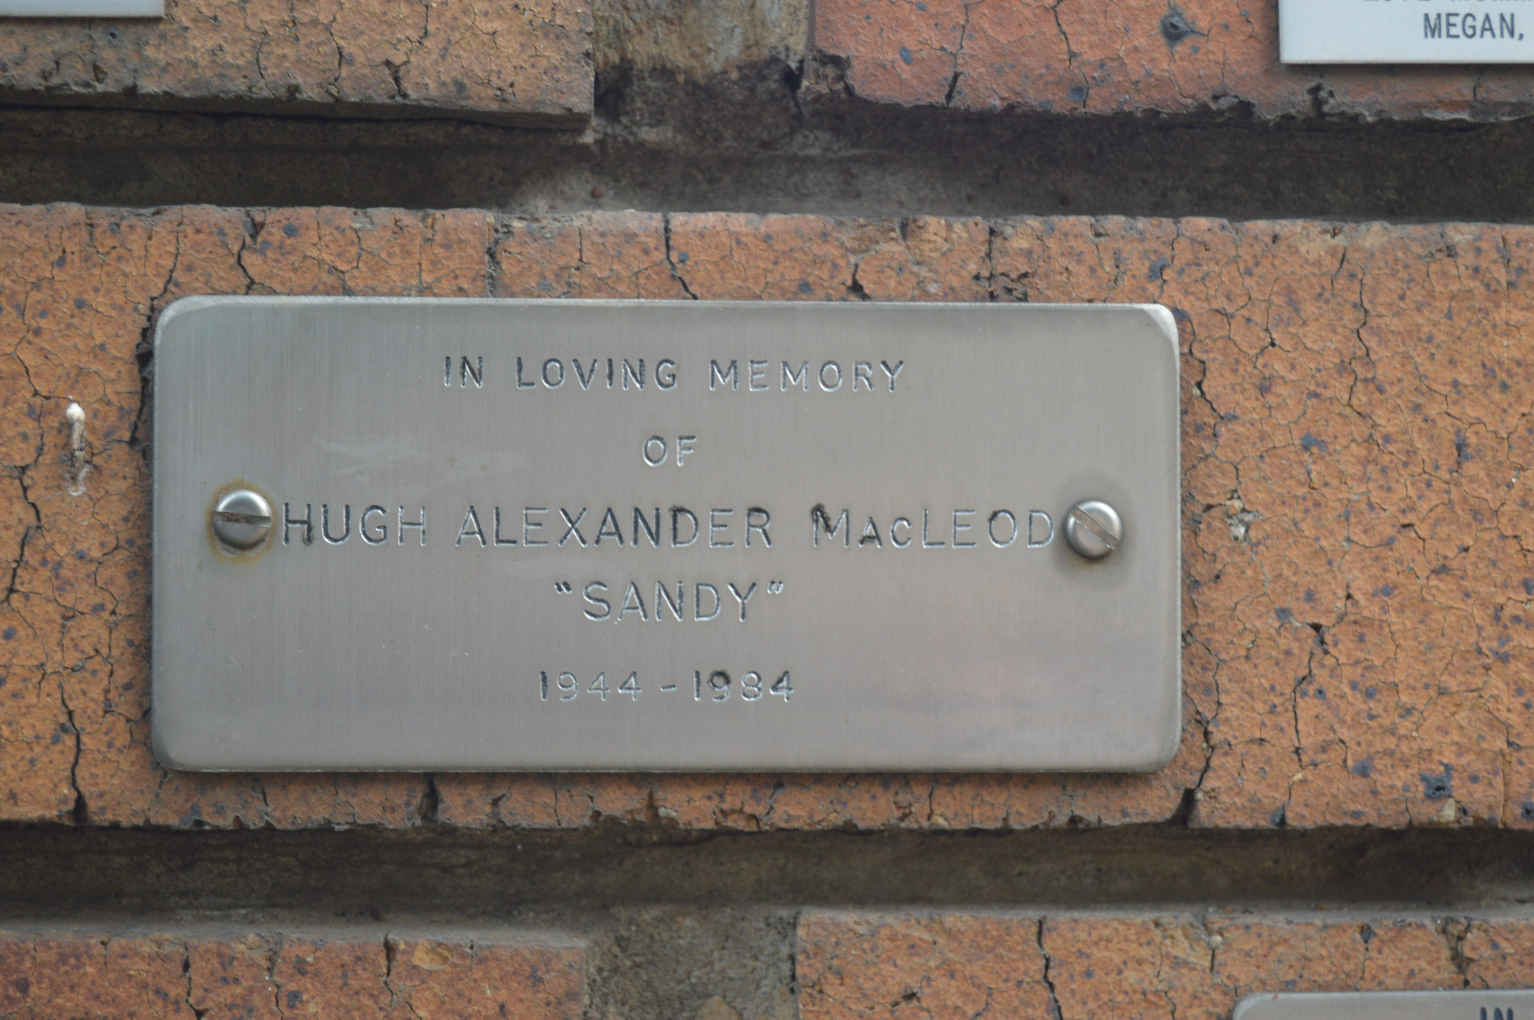 MacLEOD Hugh Alexander 1944-1984